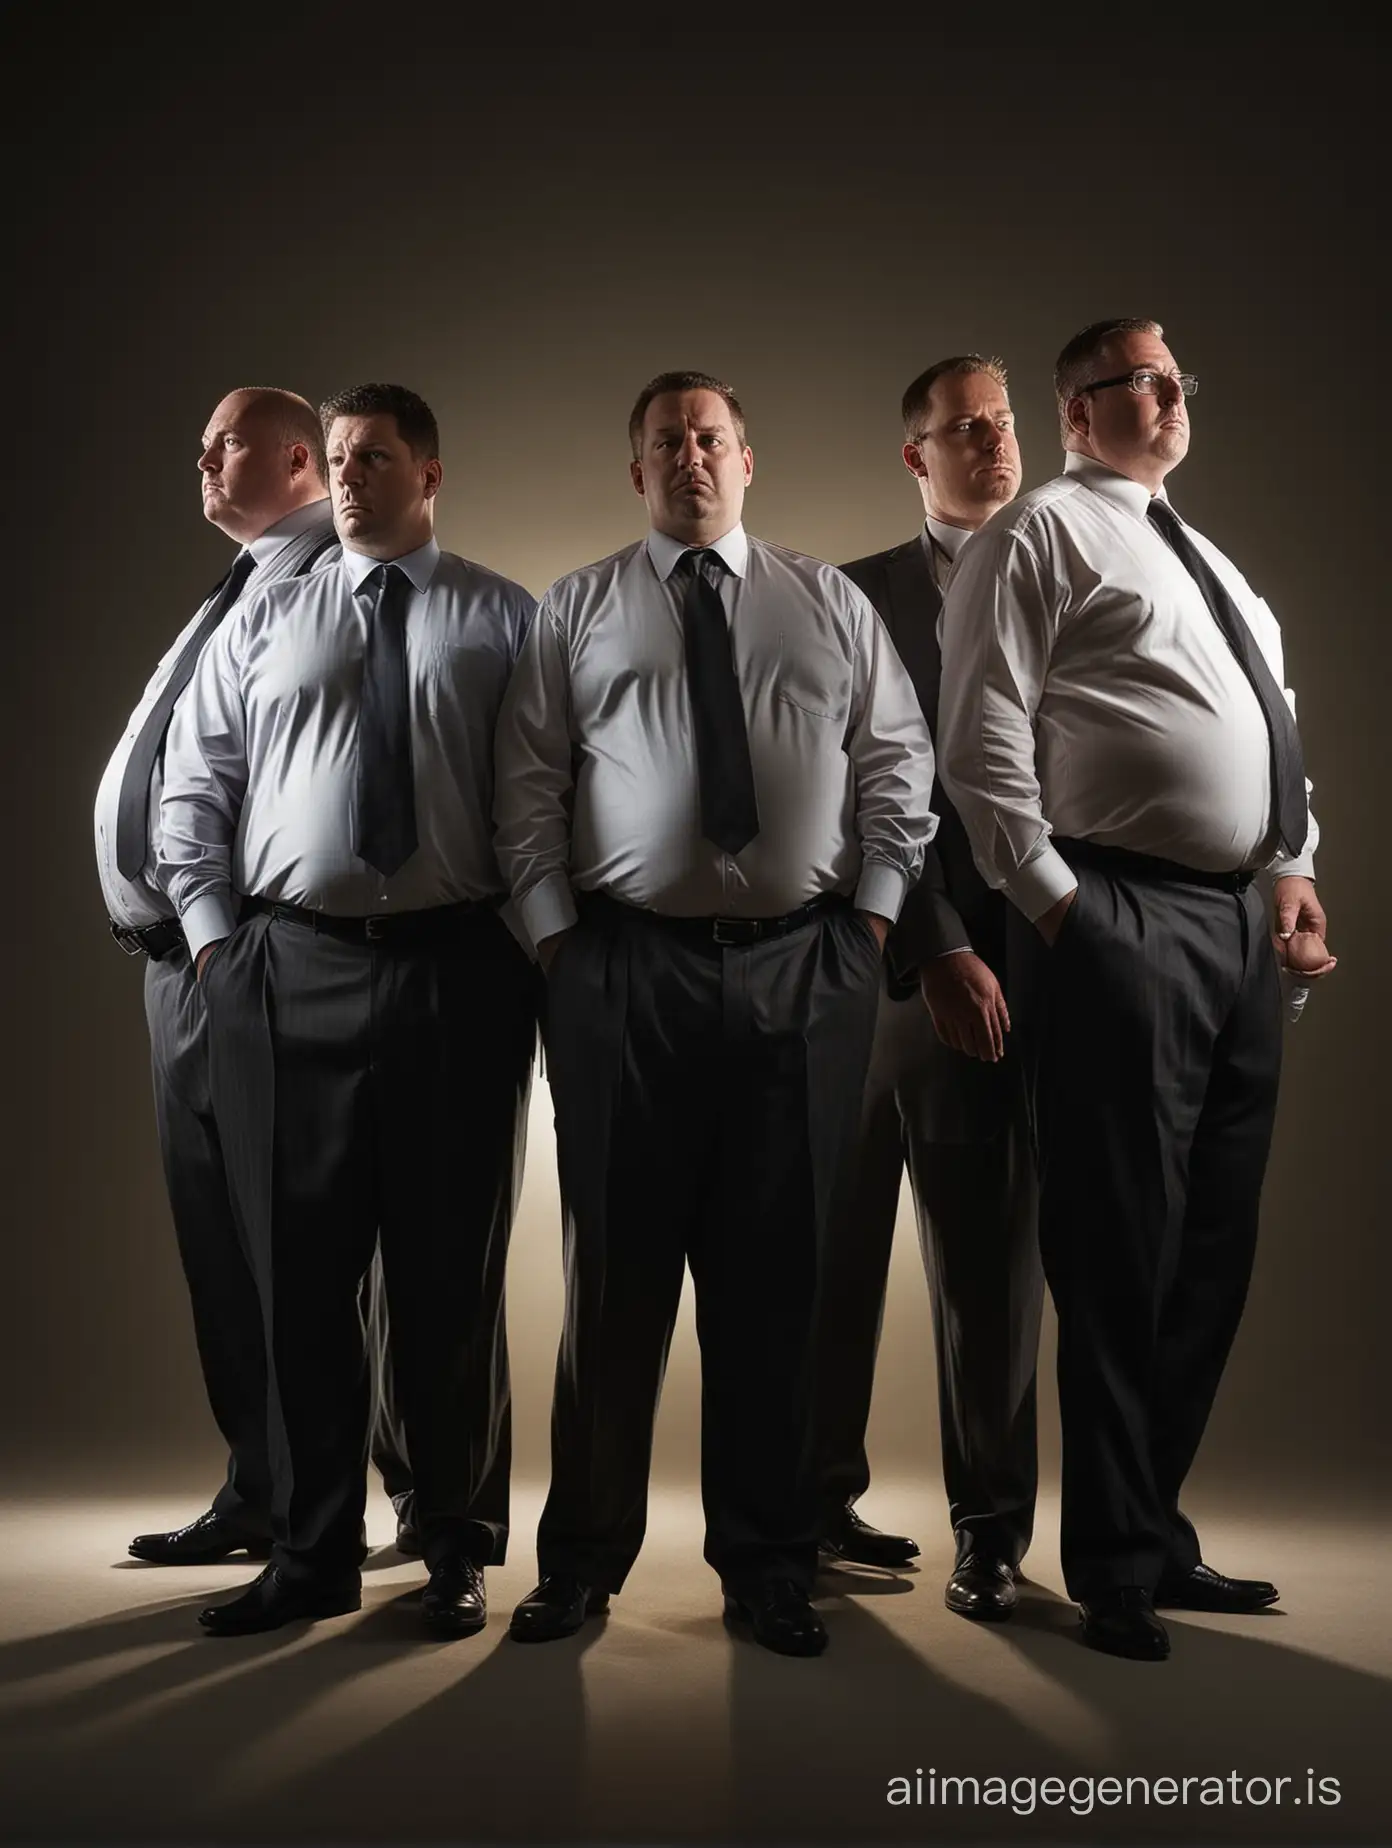 Four-Overweight-Businessmen-in-Intense-Lighting